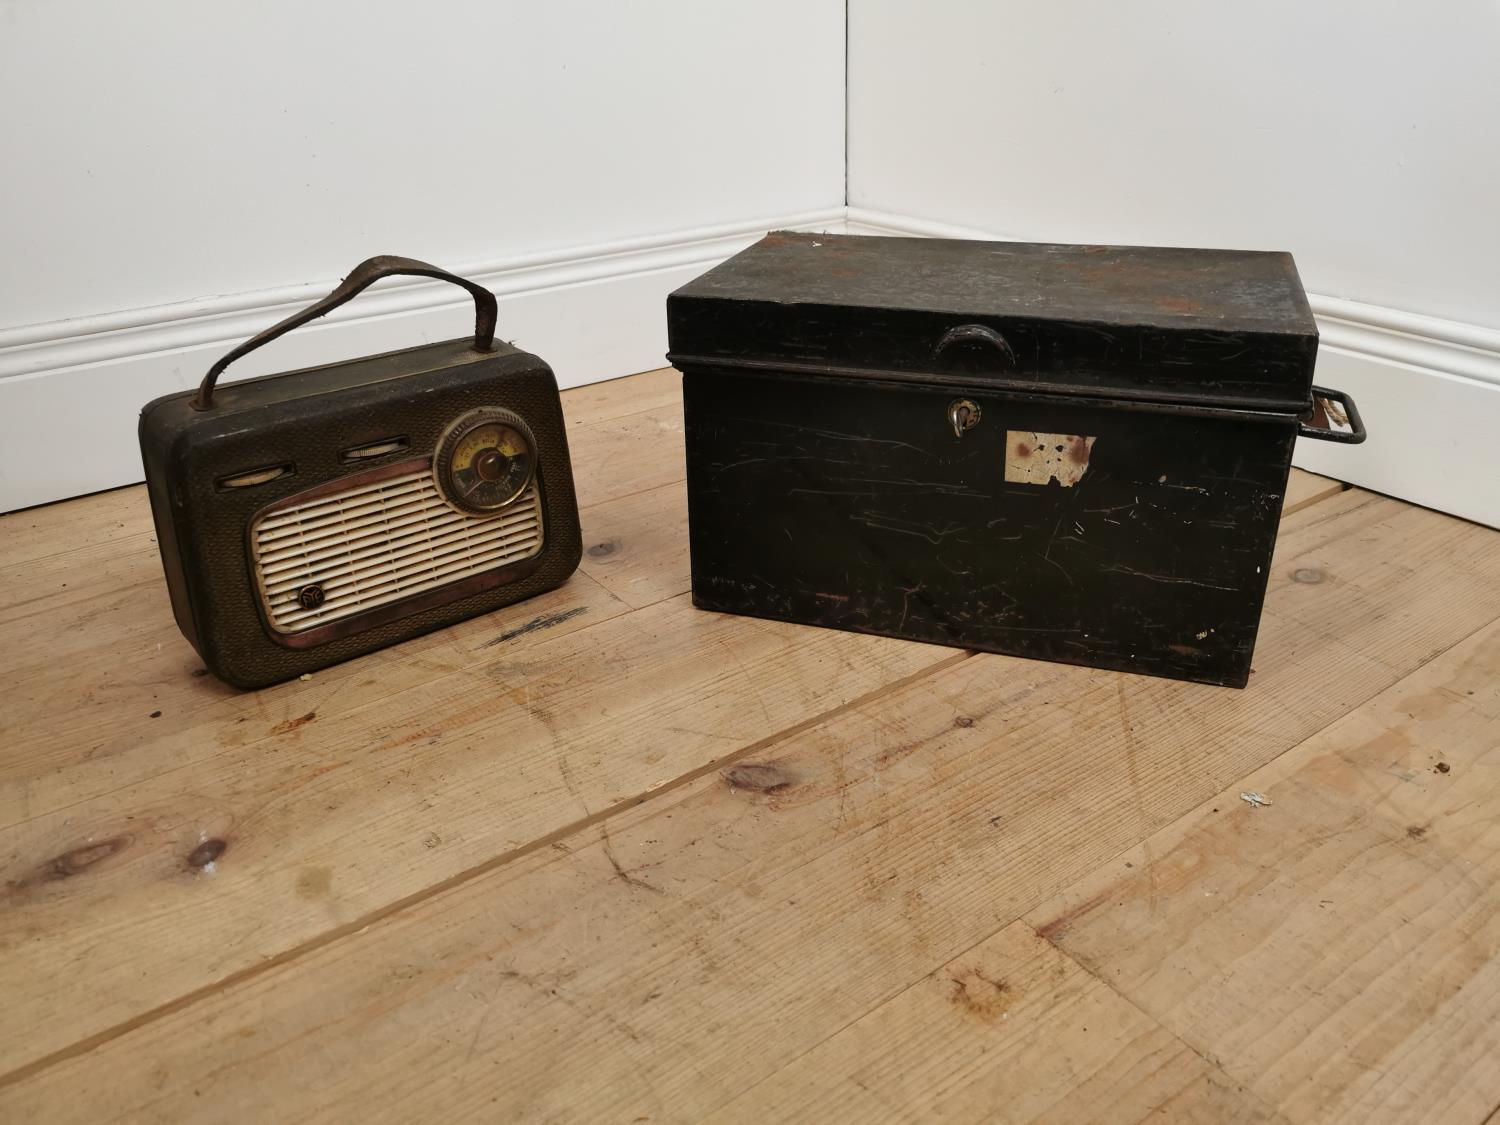 Vintage PYE radio and box